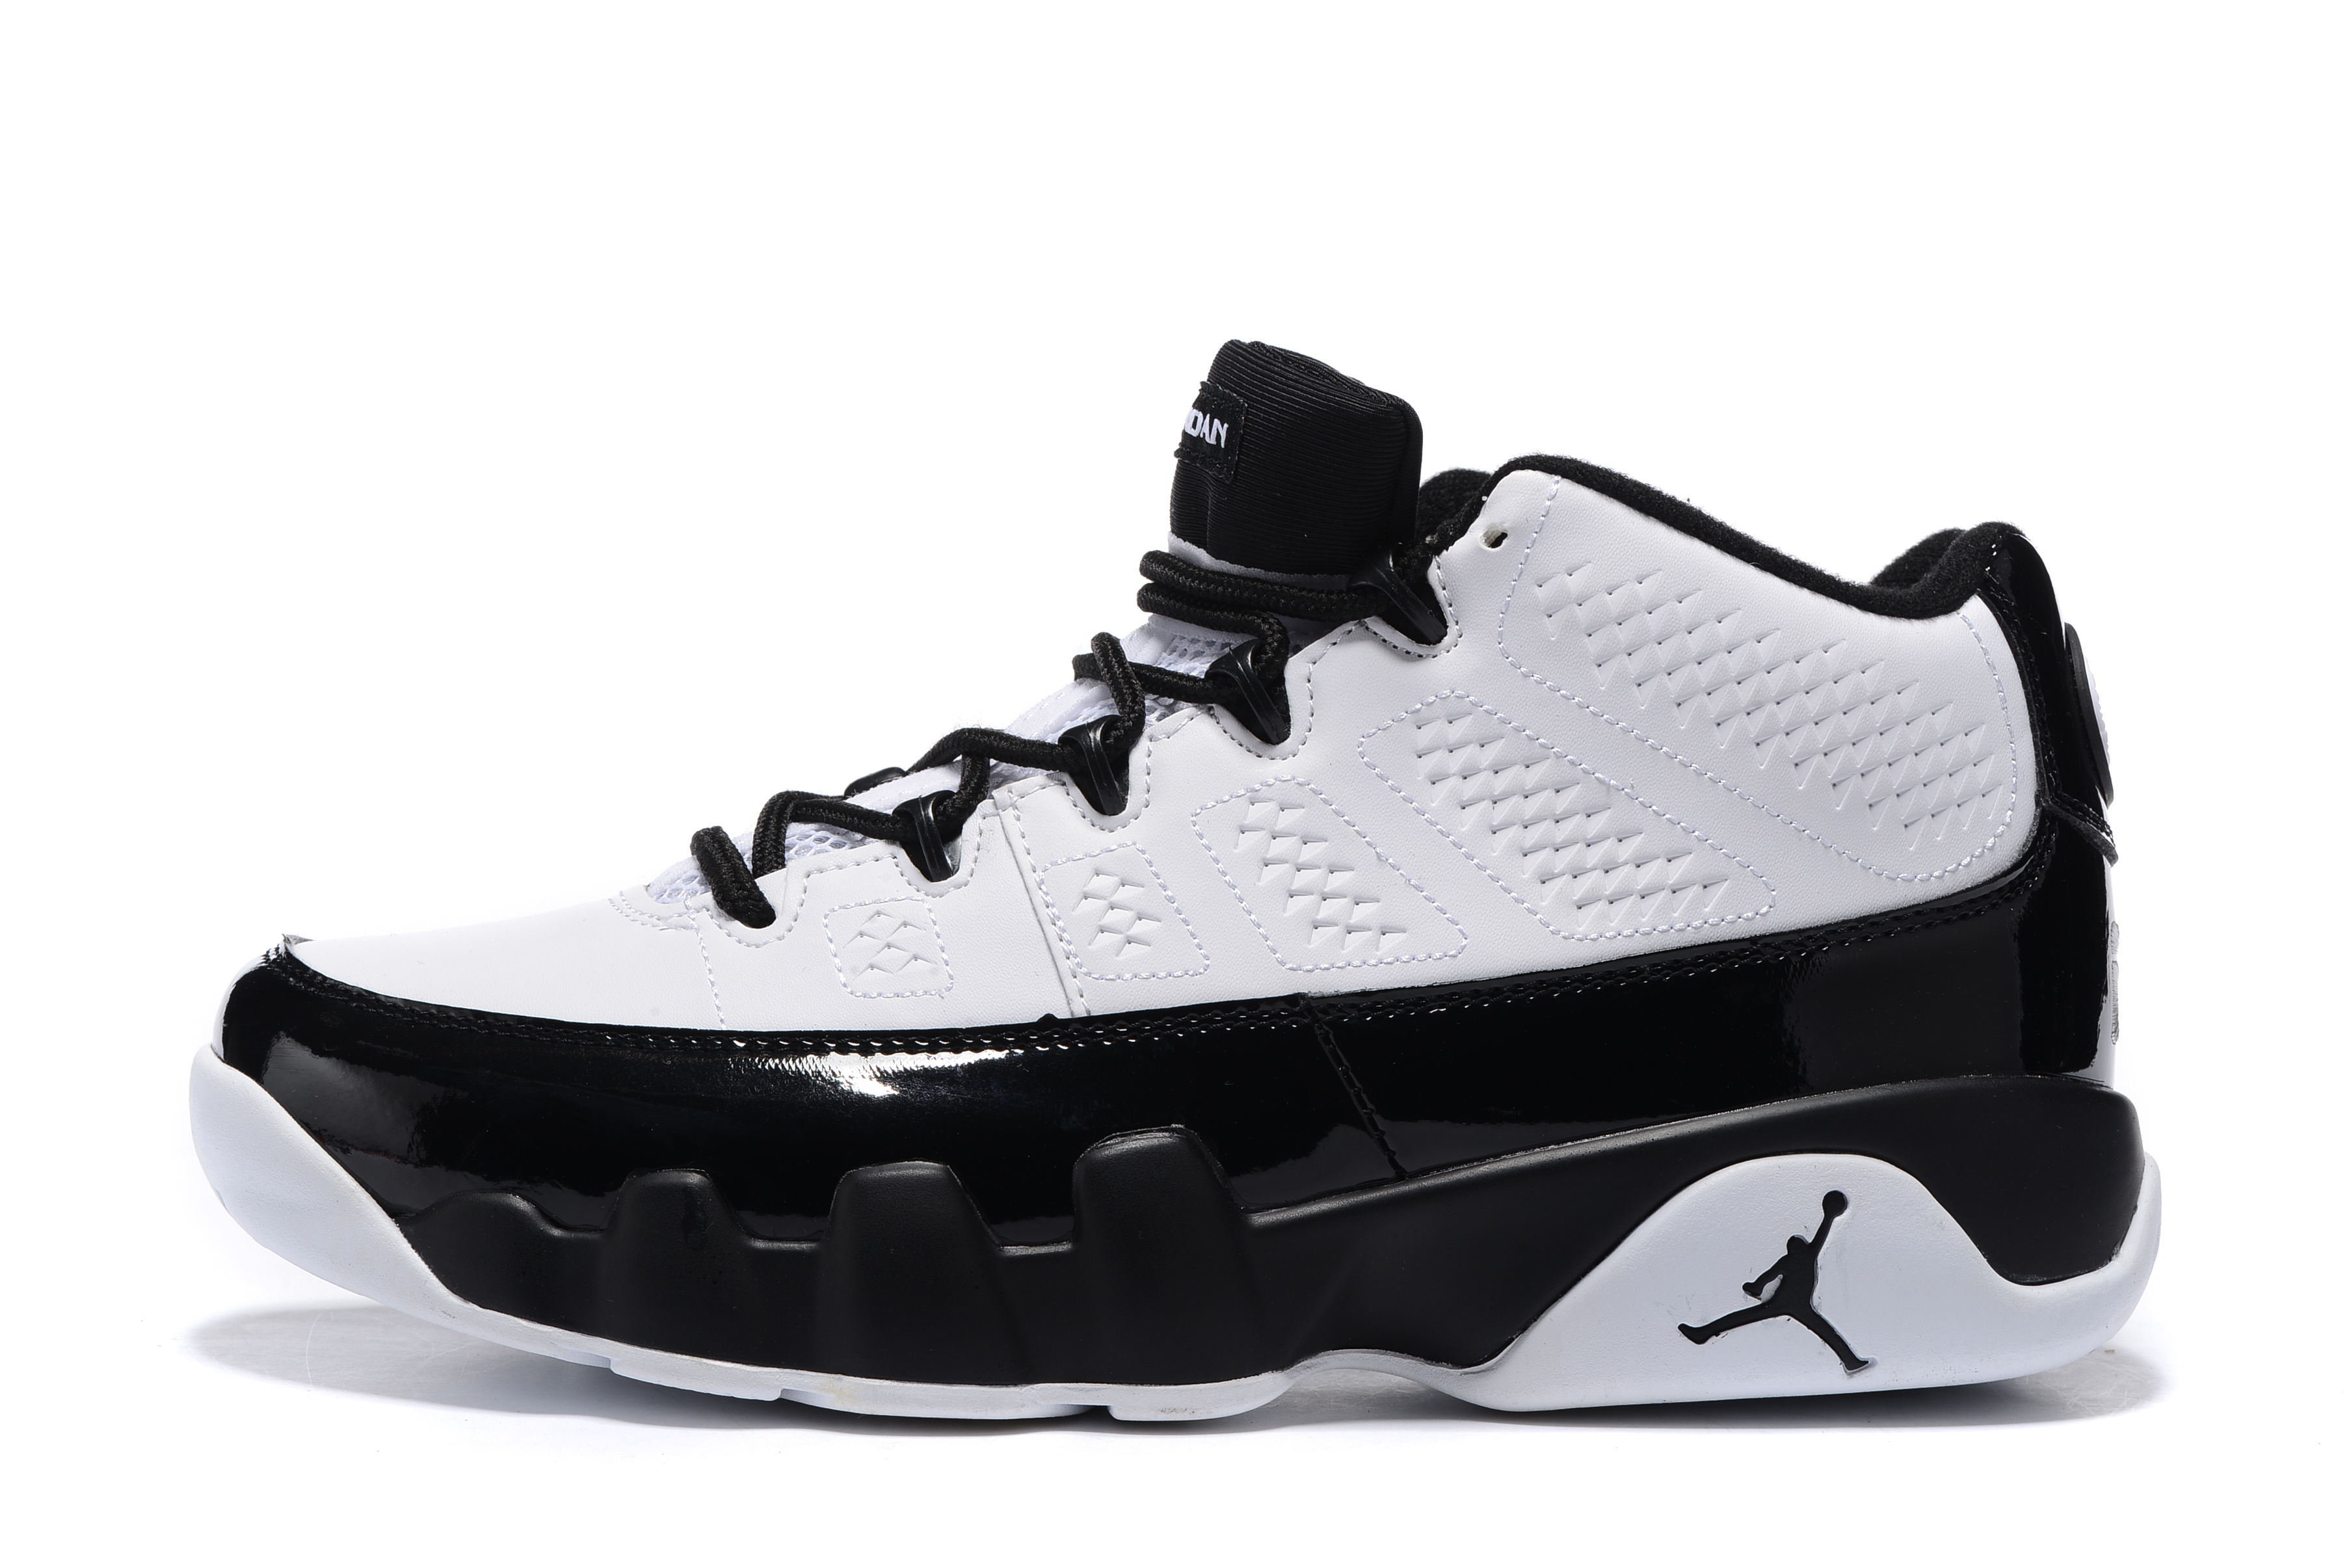 New Air Jordan 9 Retro Low White/Black 